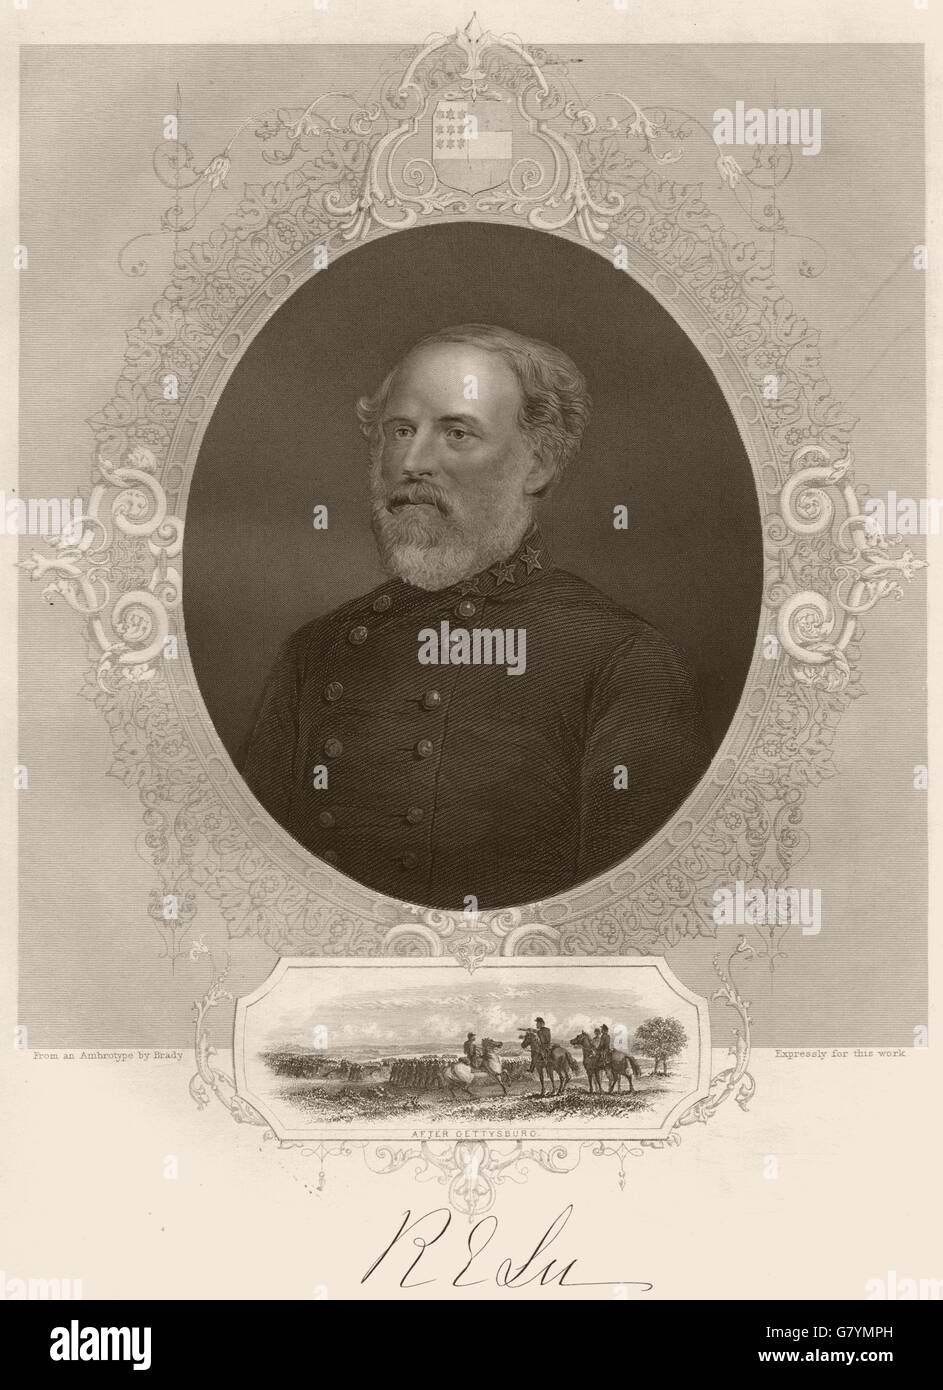 AMERICAN CIVIL WAR. General Robert E. Lee. USA. Inset: After Gettysburg, 1864 Stock Photo